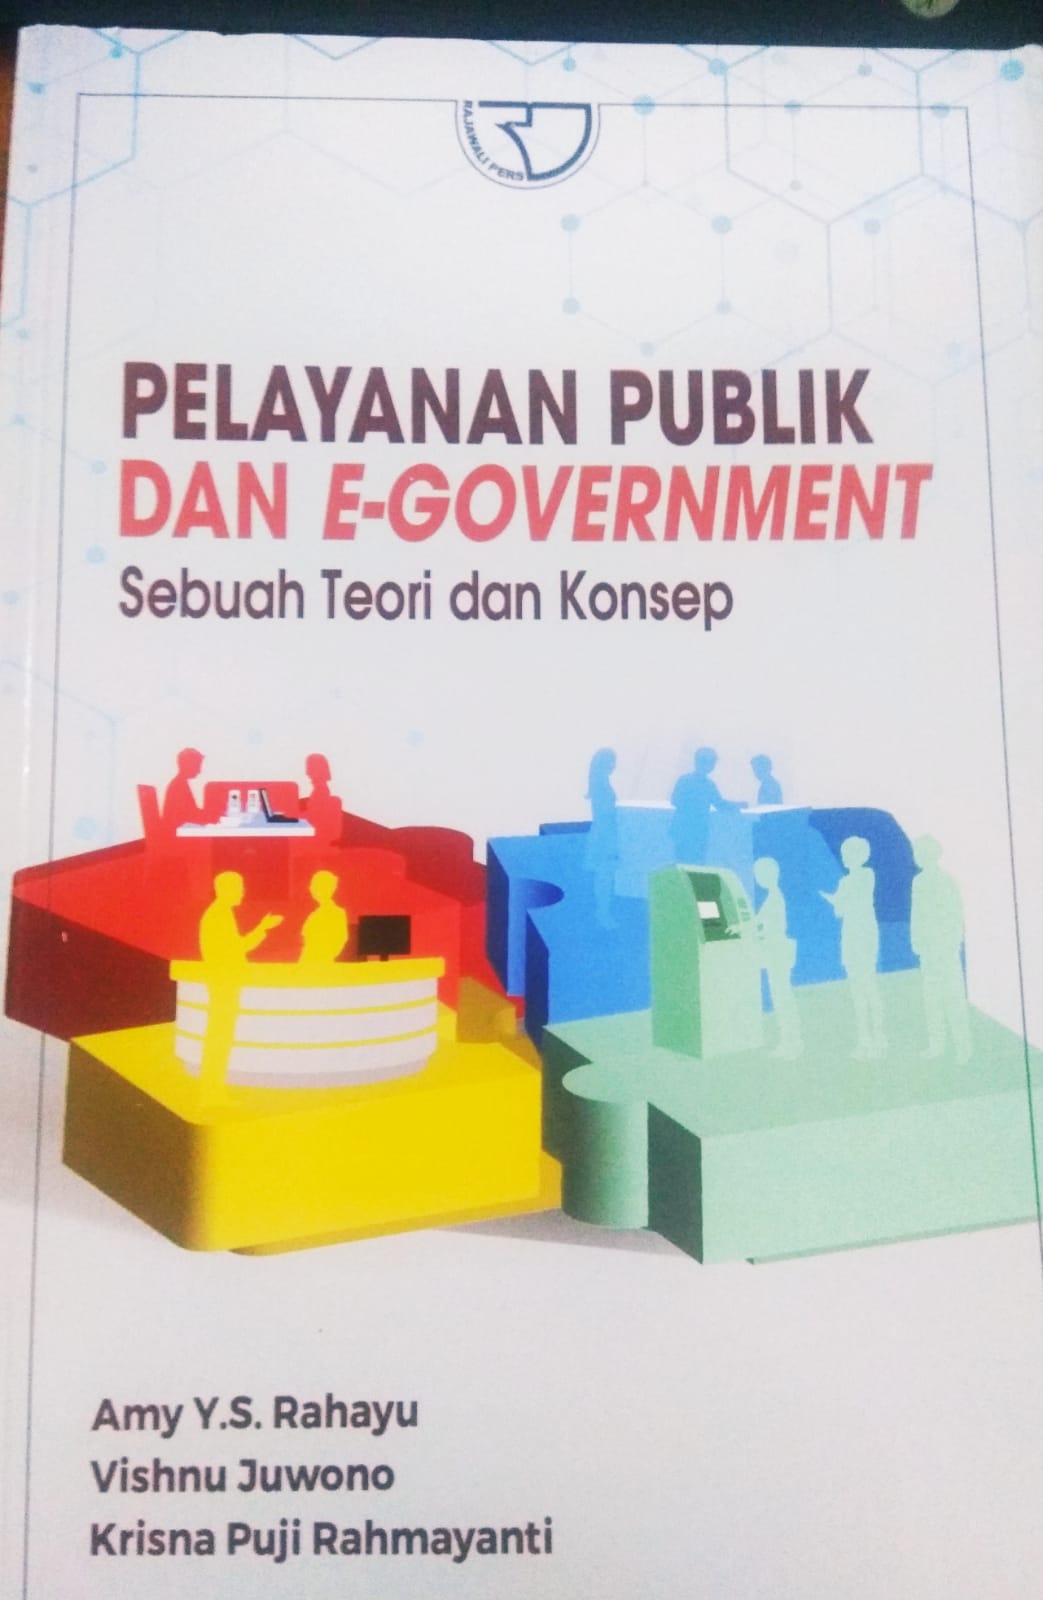 Pelayanan Publik dan E-Government